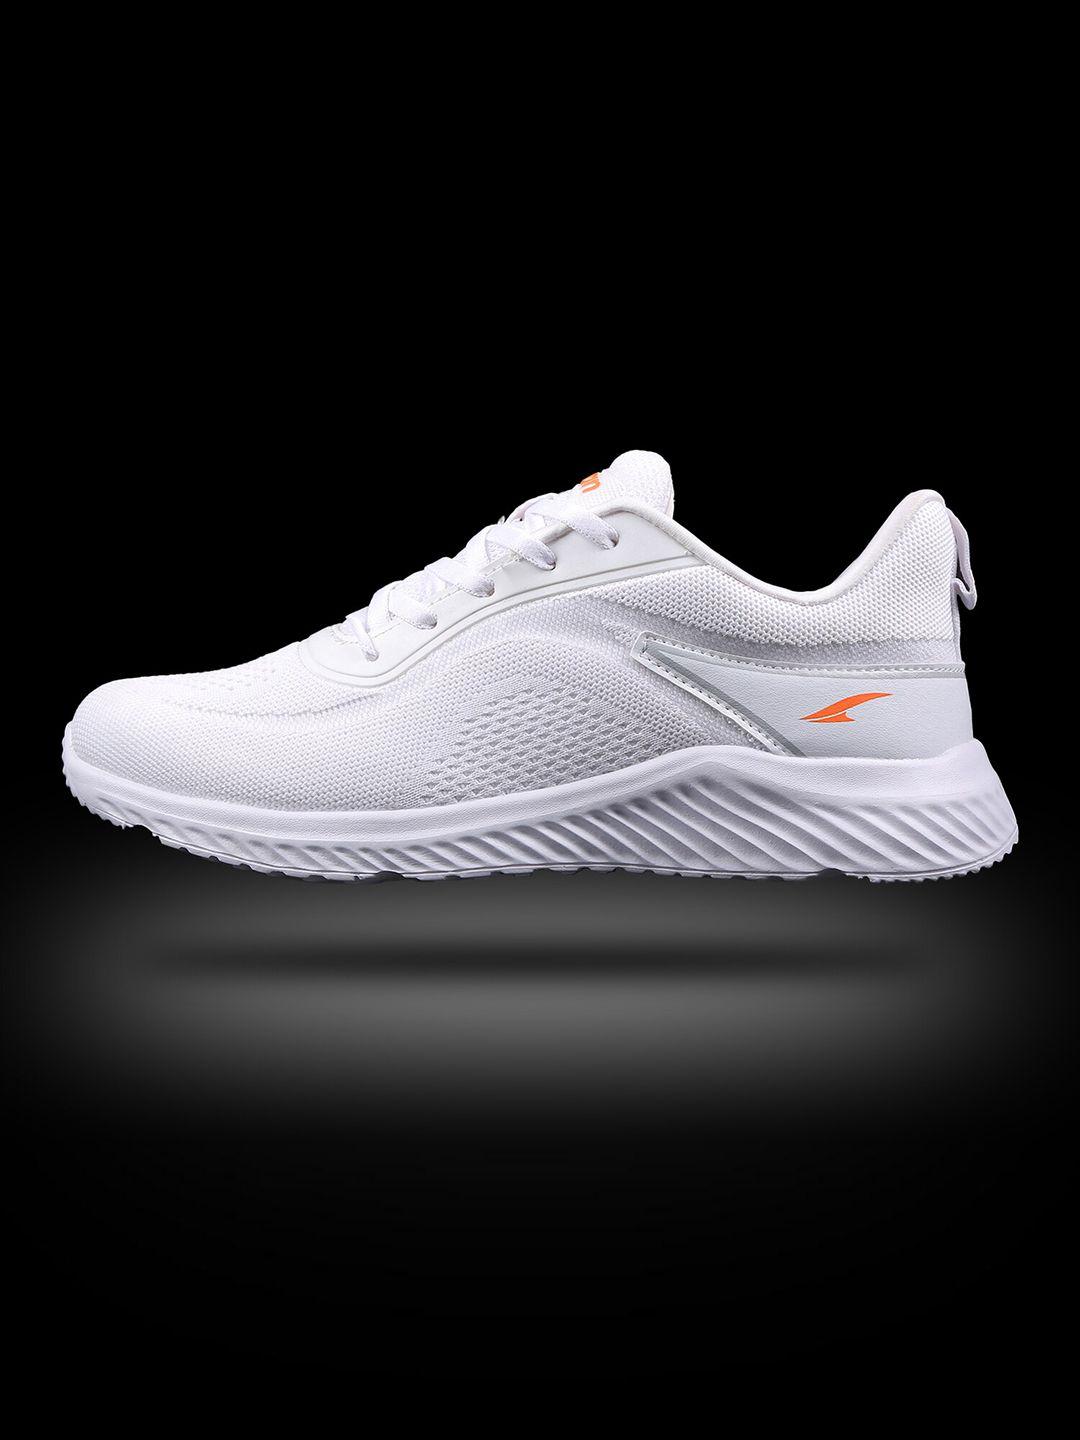 asian-men-white-sneakers